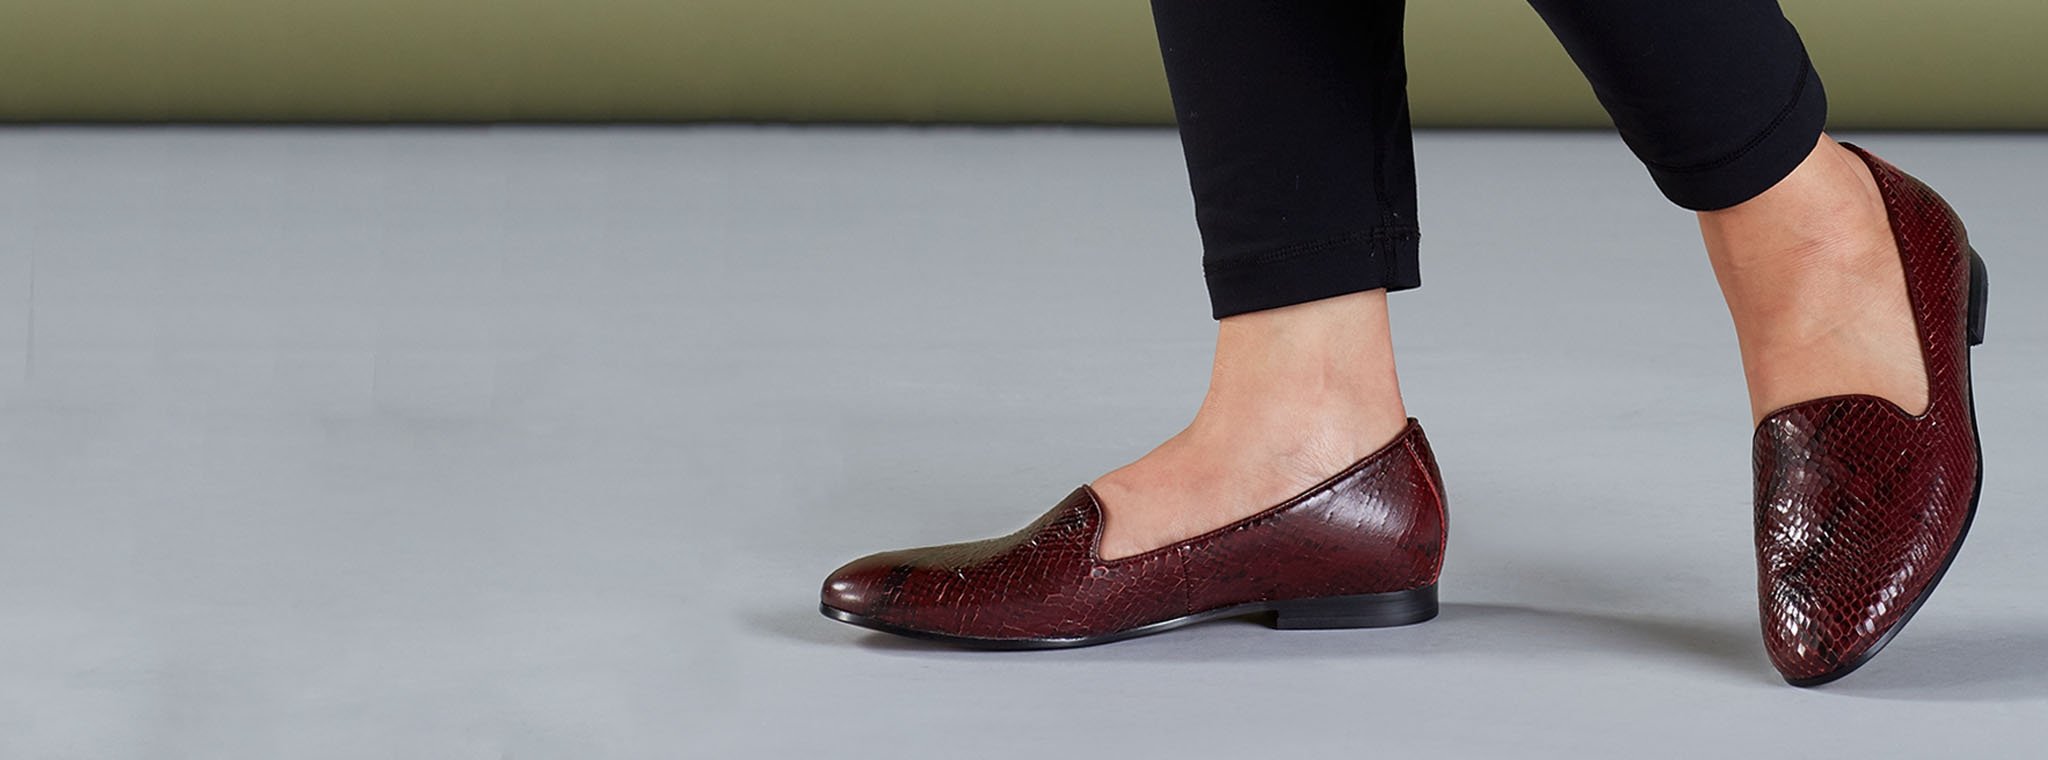 Sandals for Women | Vionic Shoes